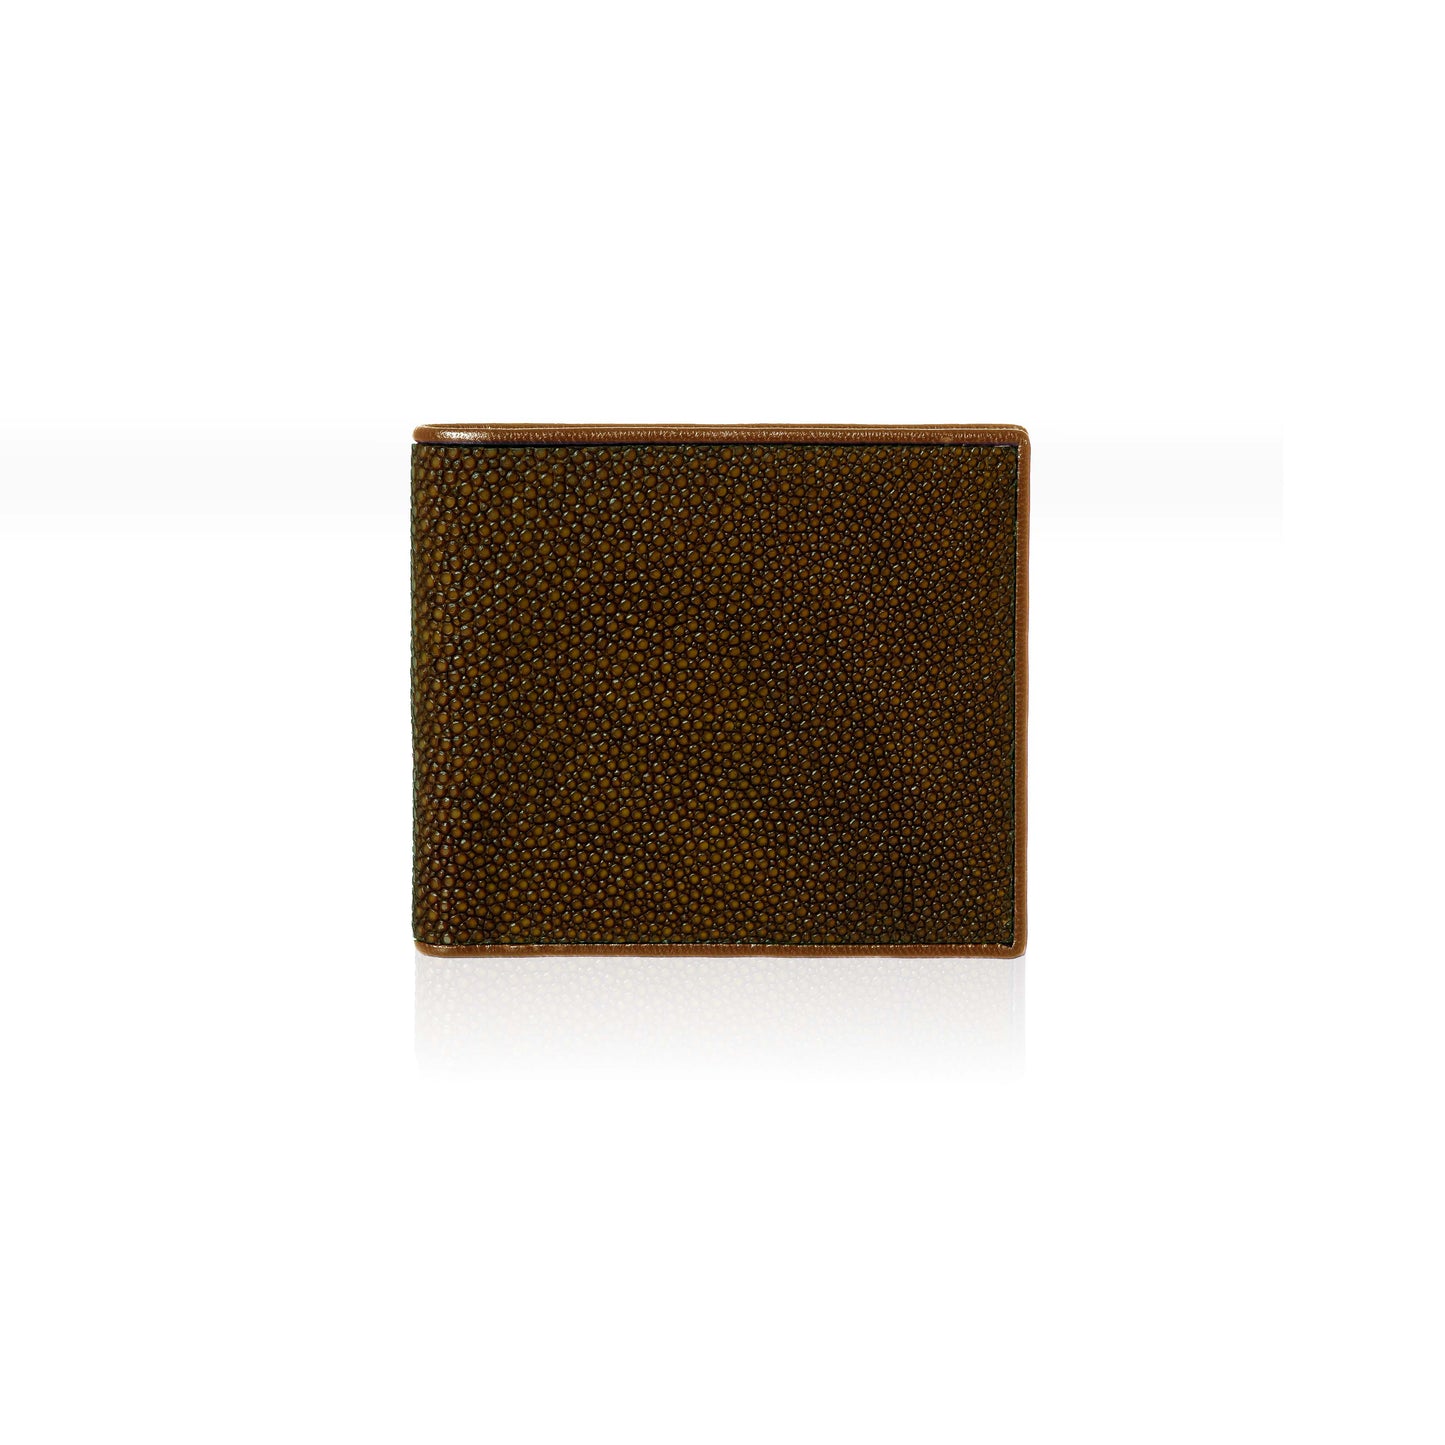 Black Stingray Leather Wallet